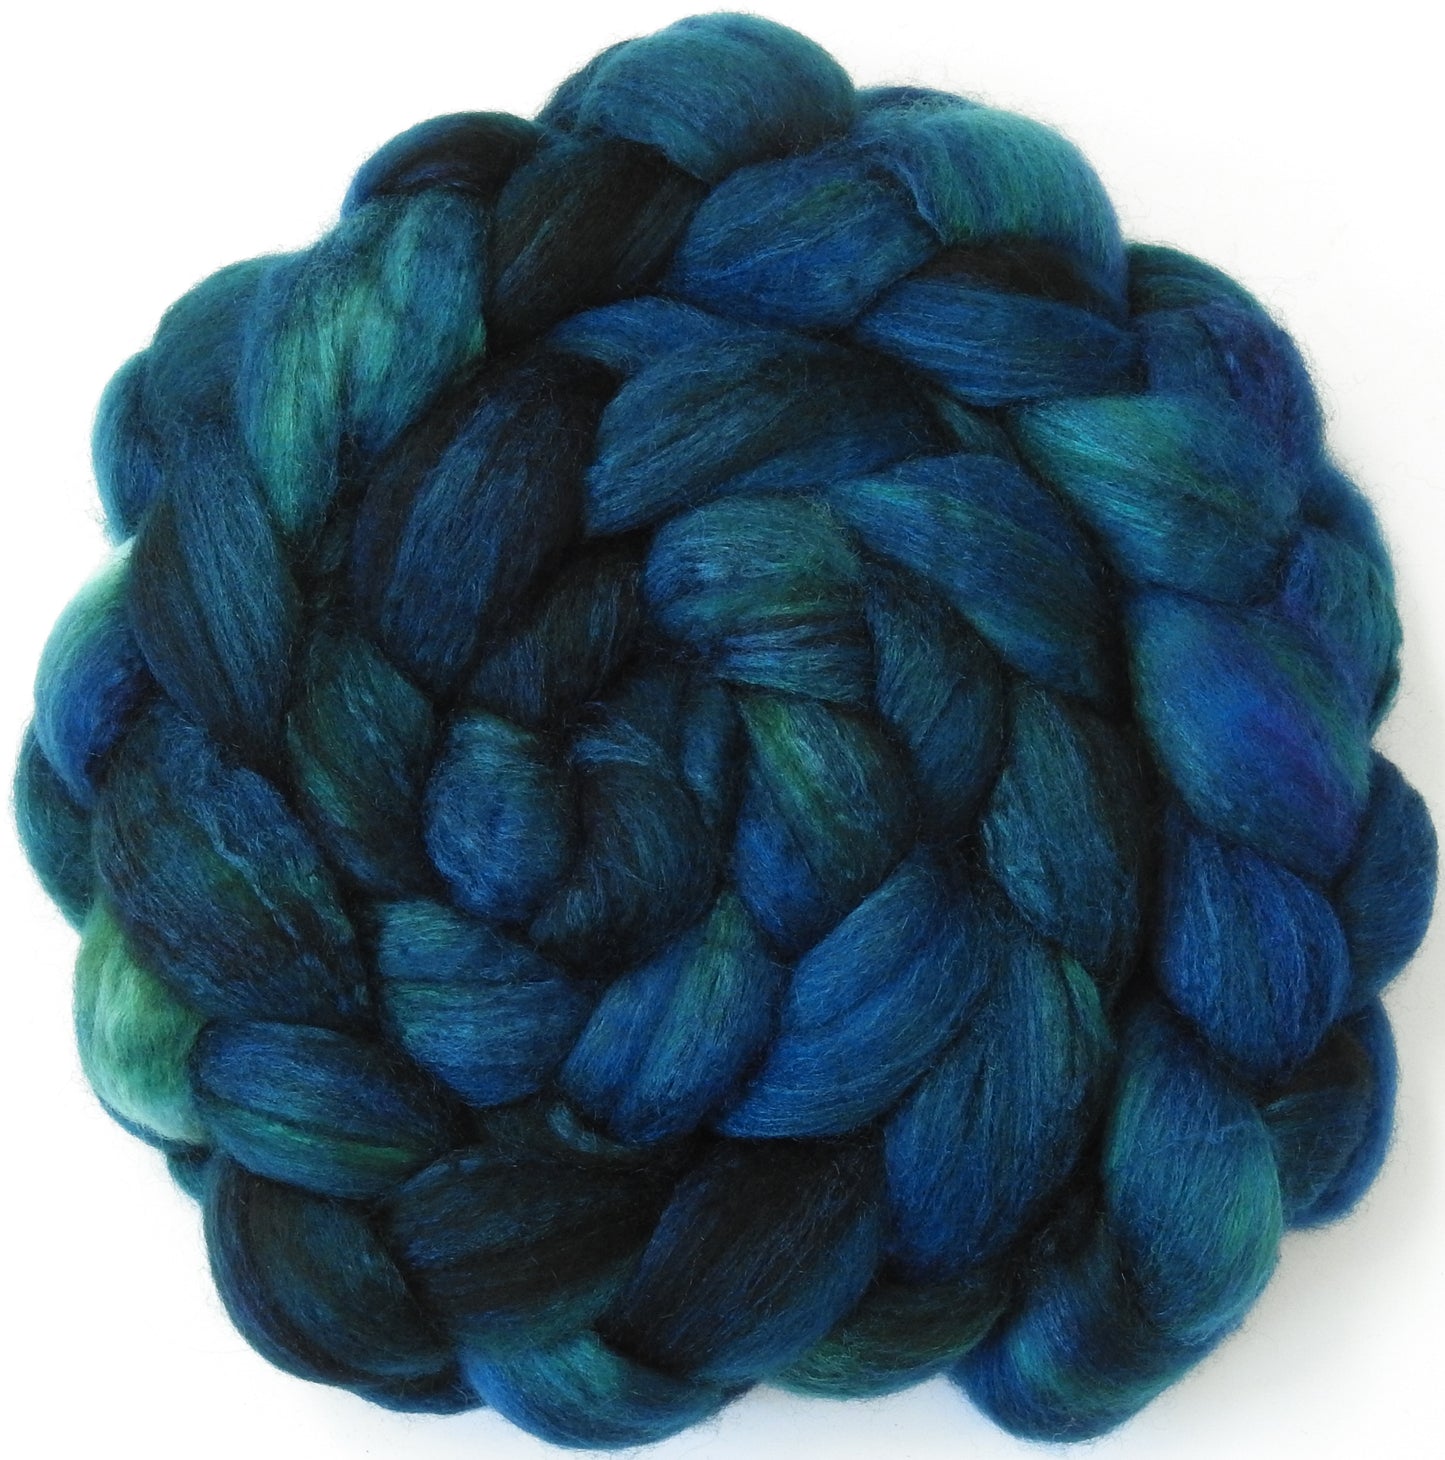 Maelstrom (5.8 oz) - Blue-faced Leicester/ Tussah Silk (75/25)